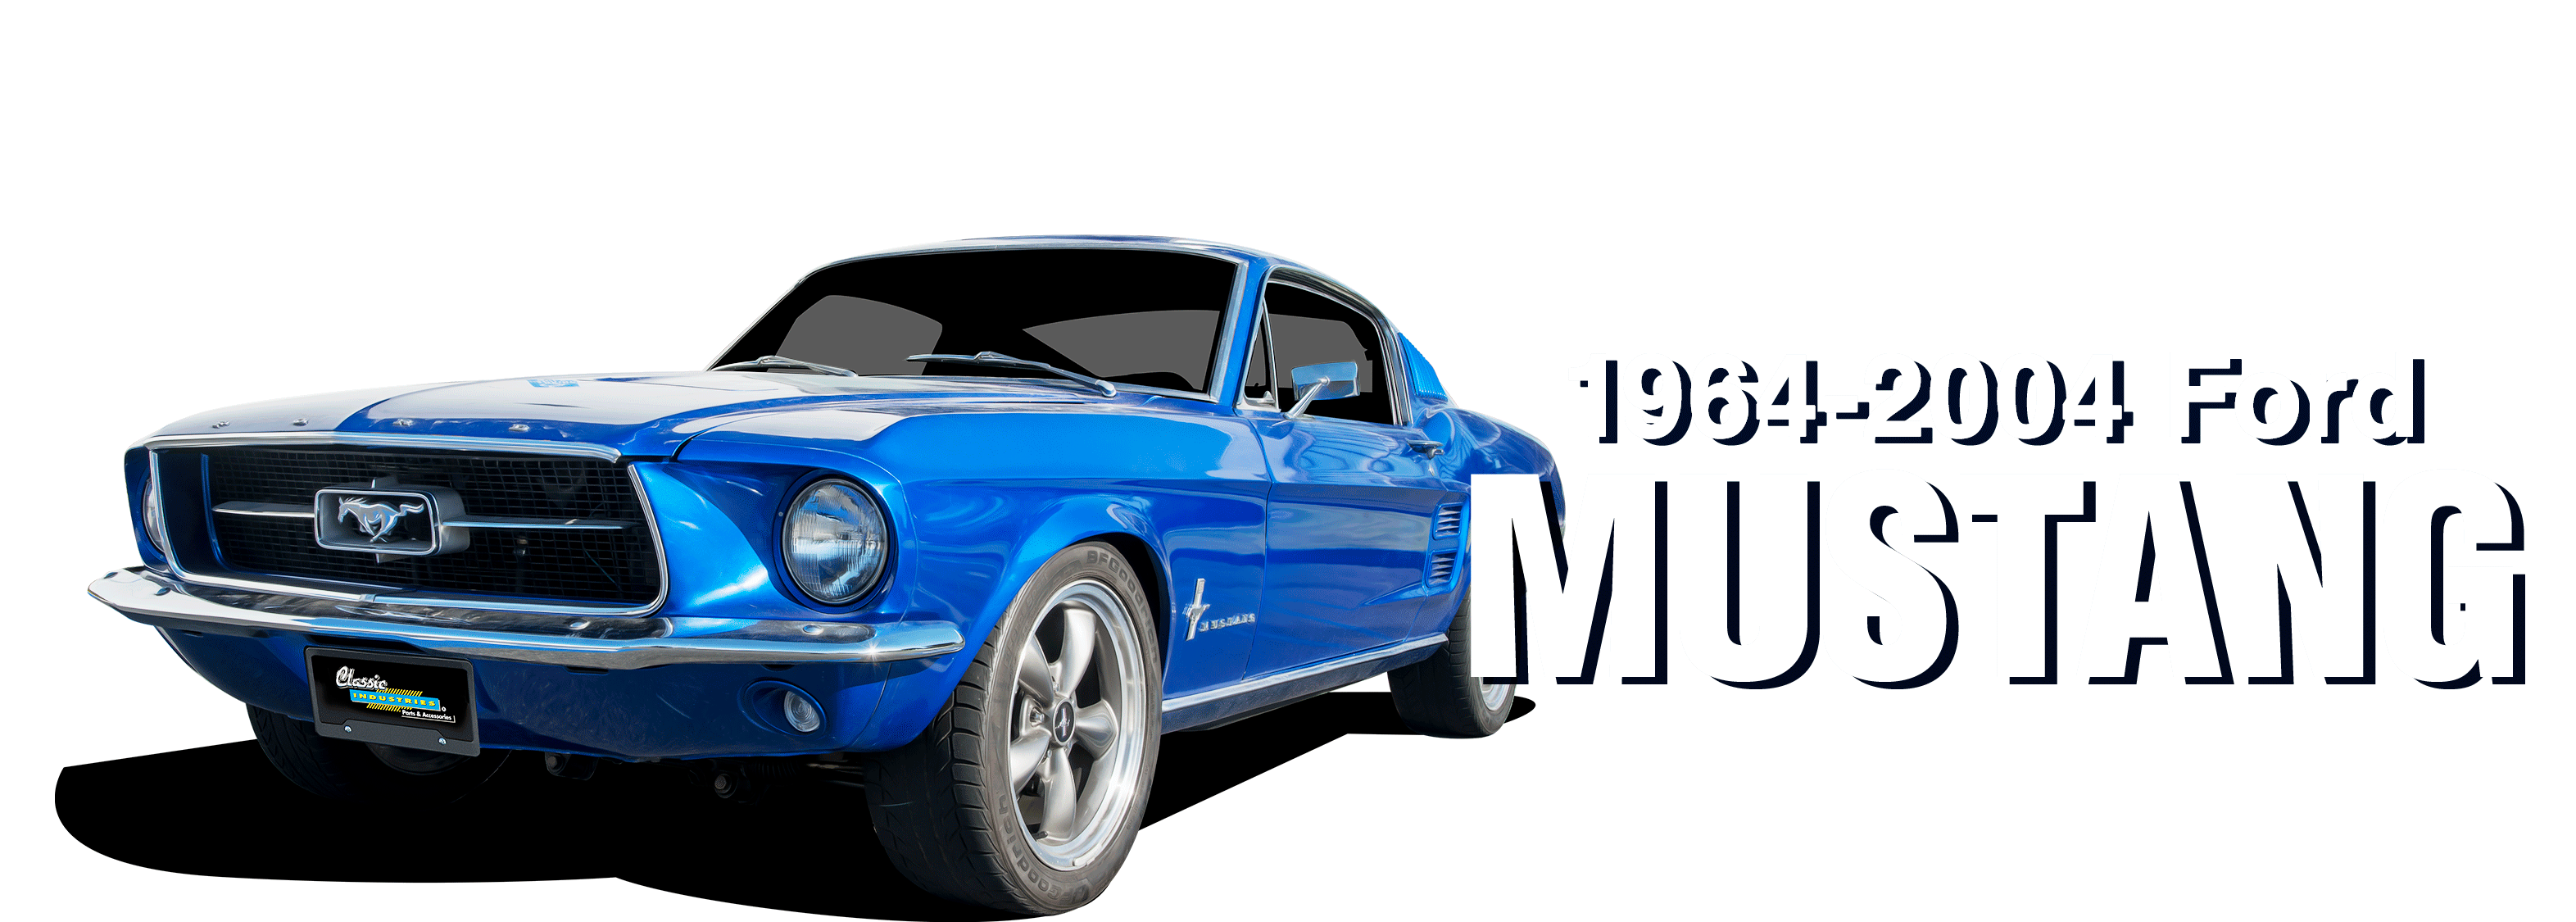 Ford-Mustang-vehicle-desktop